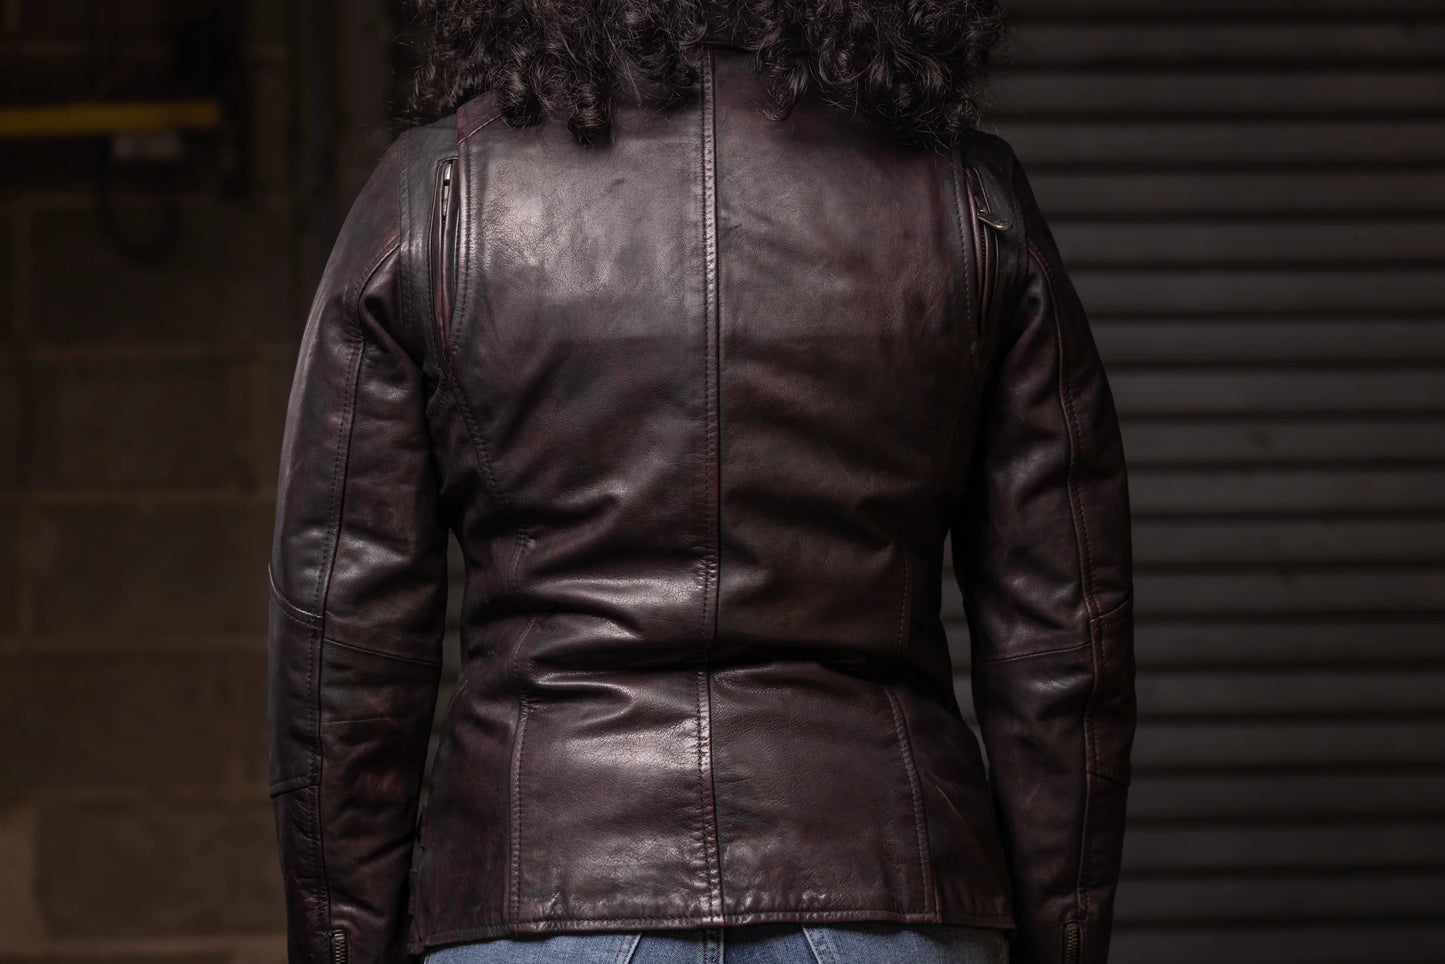 Wildside -Women's Motorcycle Leather Jacket